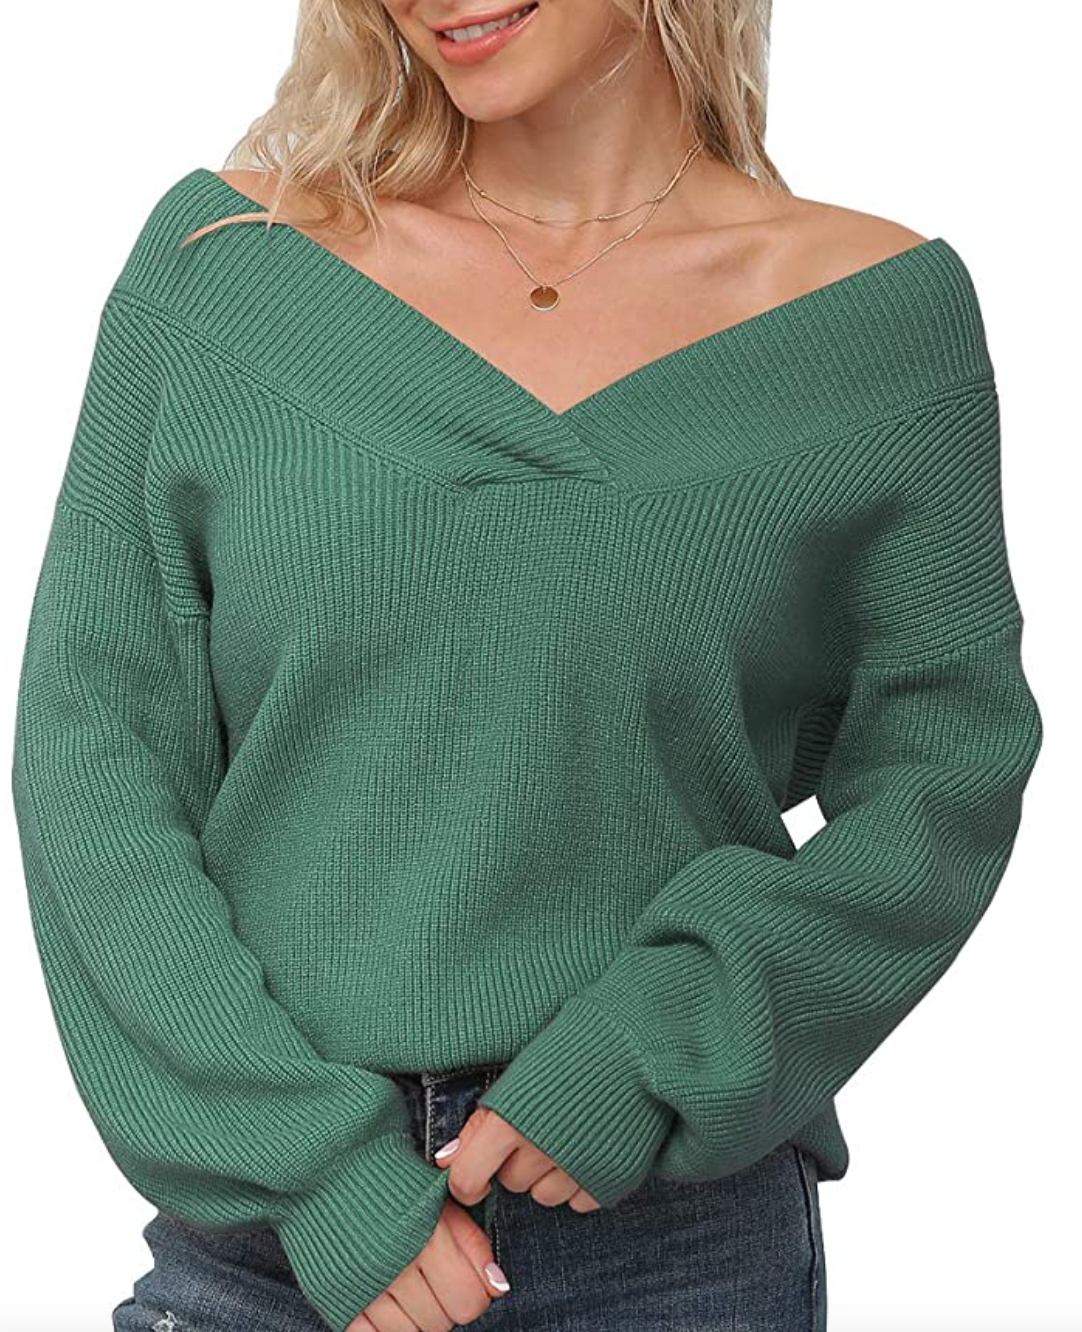 Feiersi Women's Off Shoulder Sweater